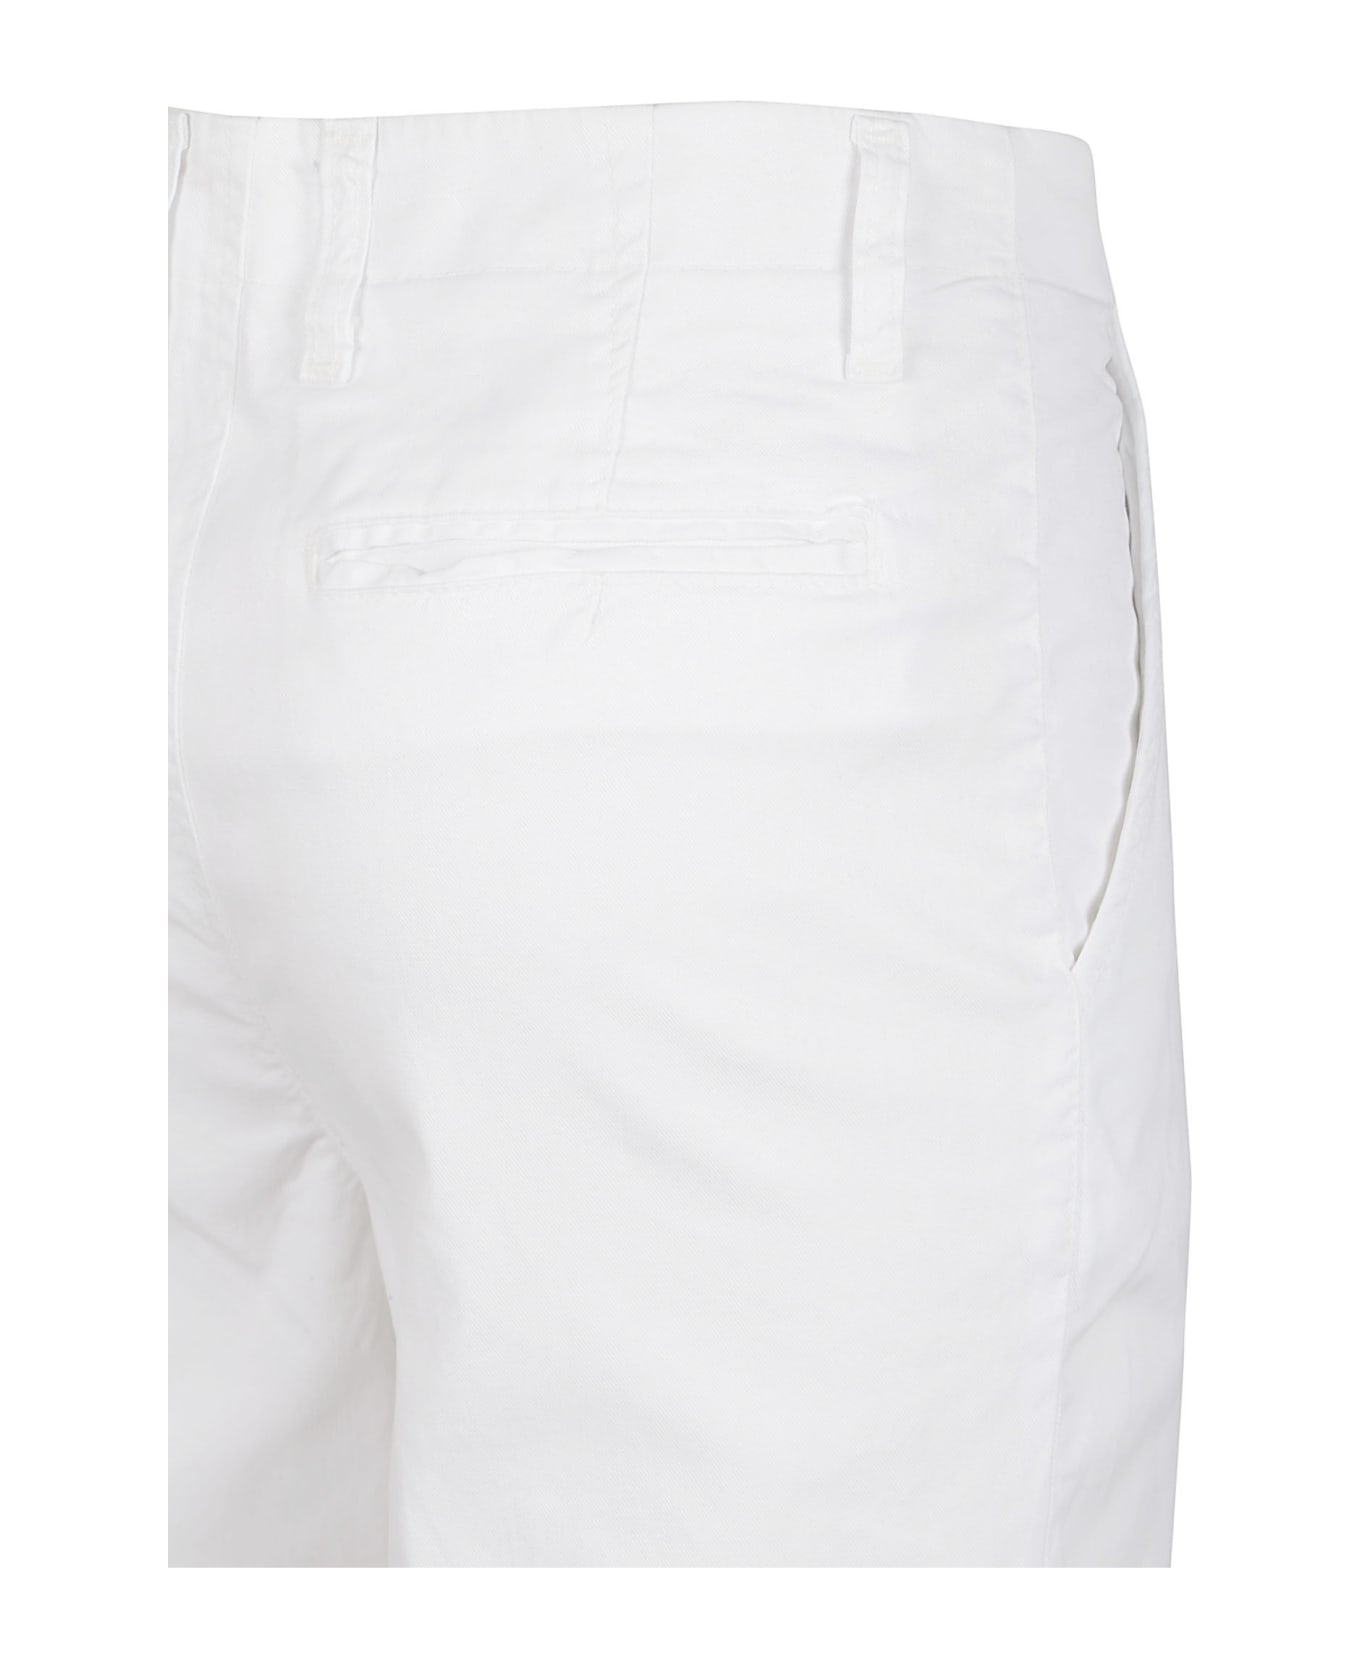 True Royal Trousers White - White ボトムス